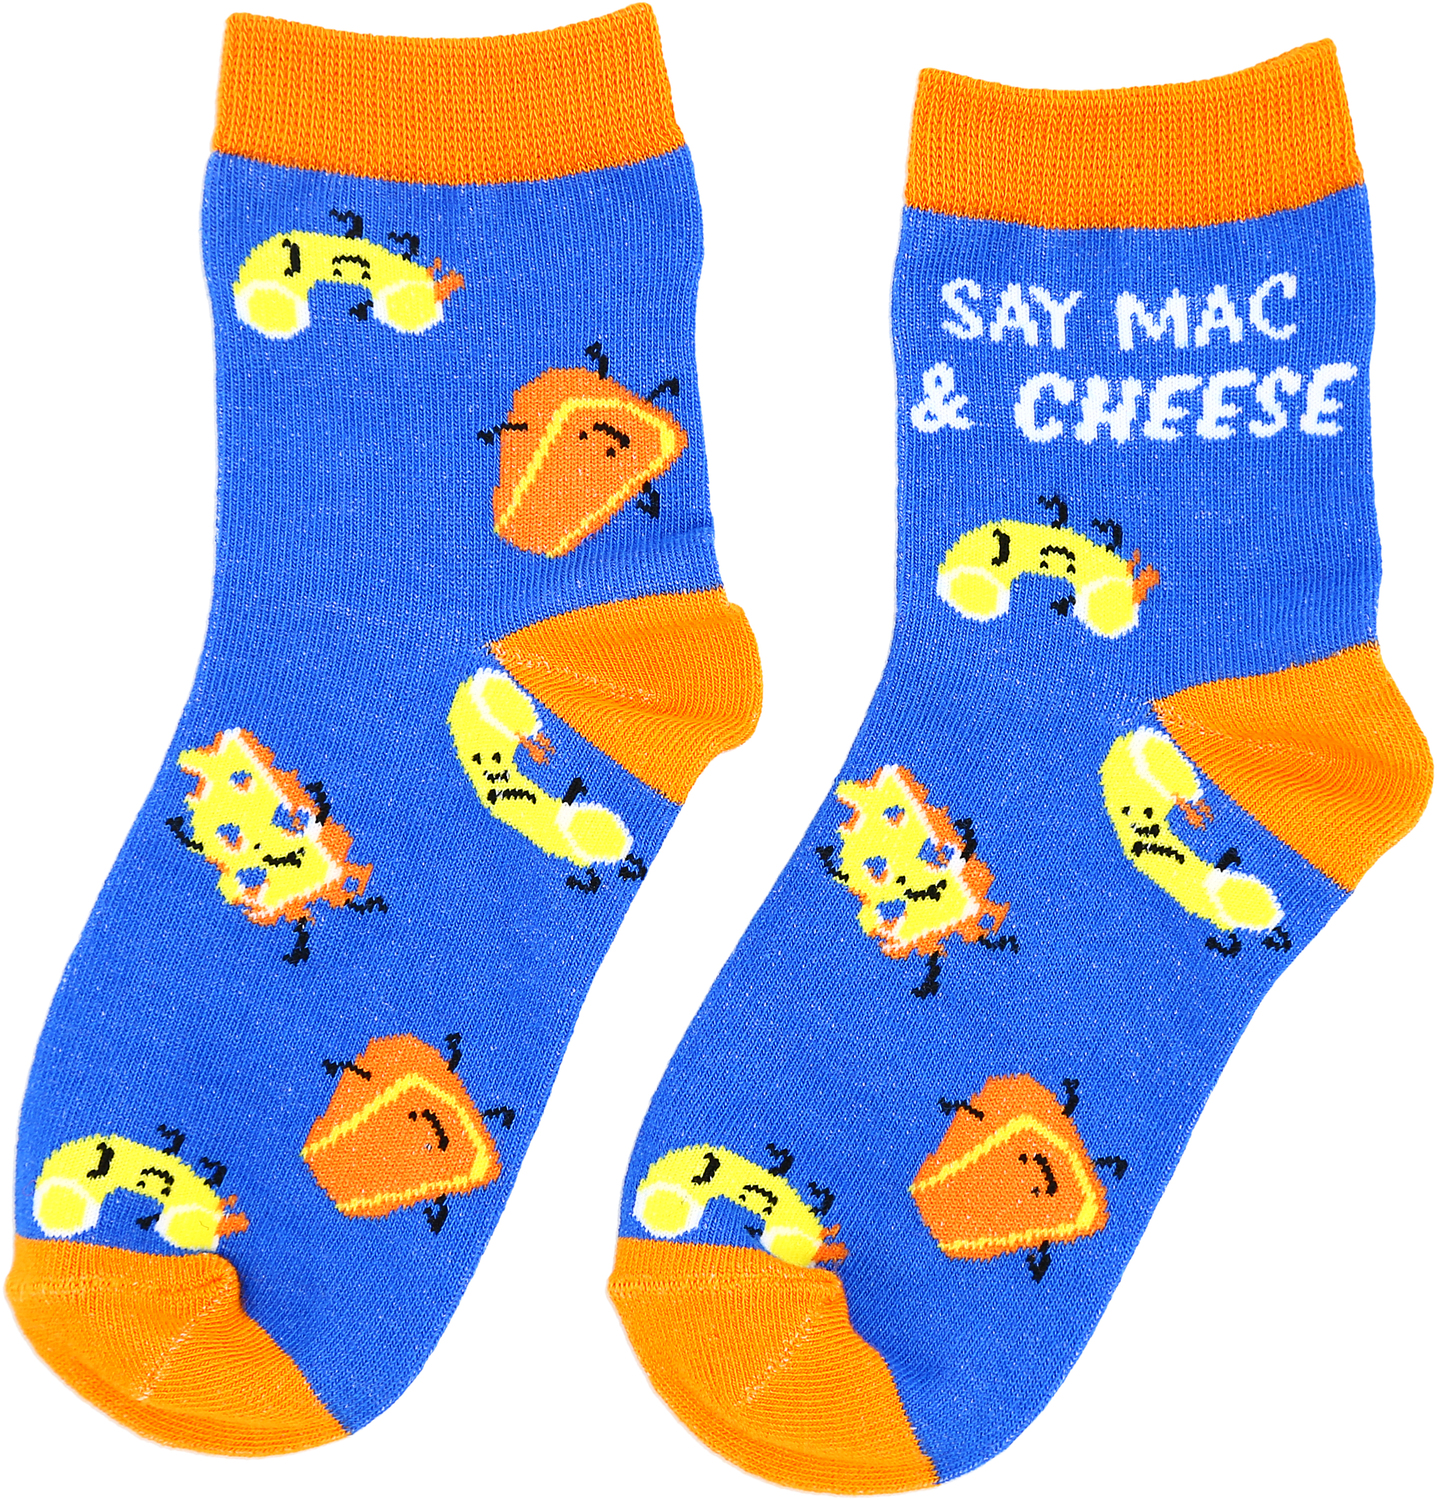 Mac n' Cheese by Late Night Snacks - Mac n' Cheese - S/M Youth Cotton Blend Crew Socks